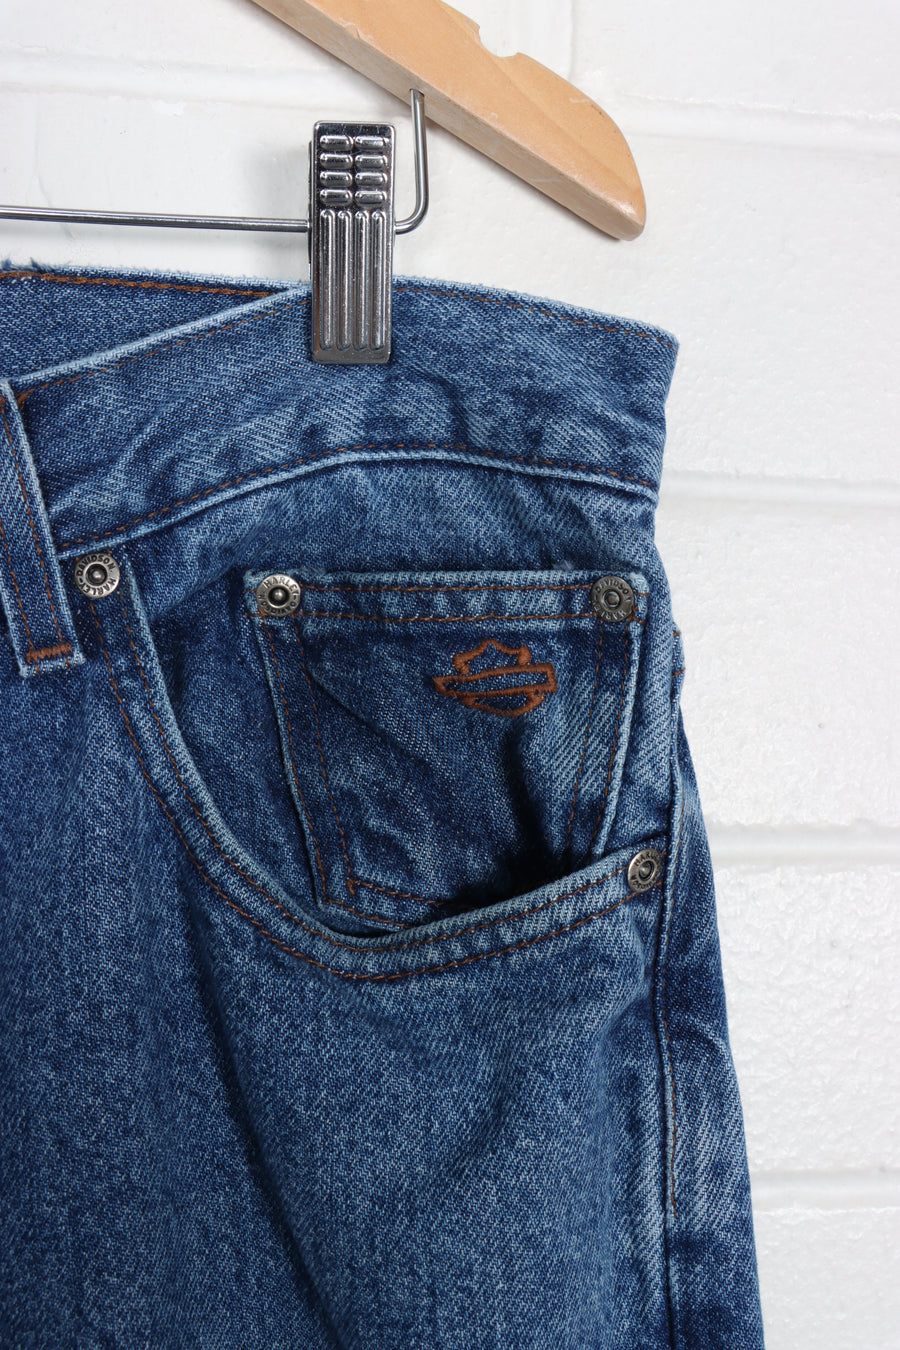 HARLEY DAVIDSON Denim Jeans (Women's 35x30)